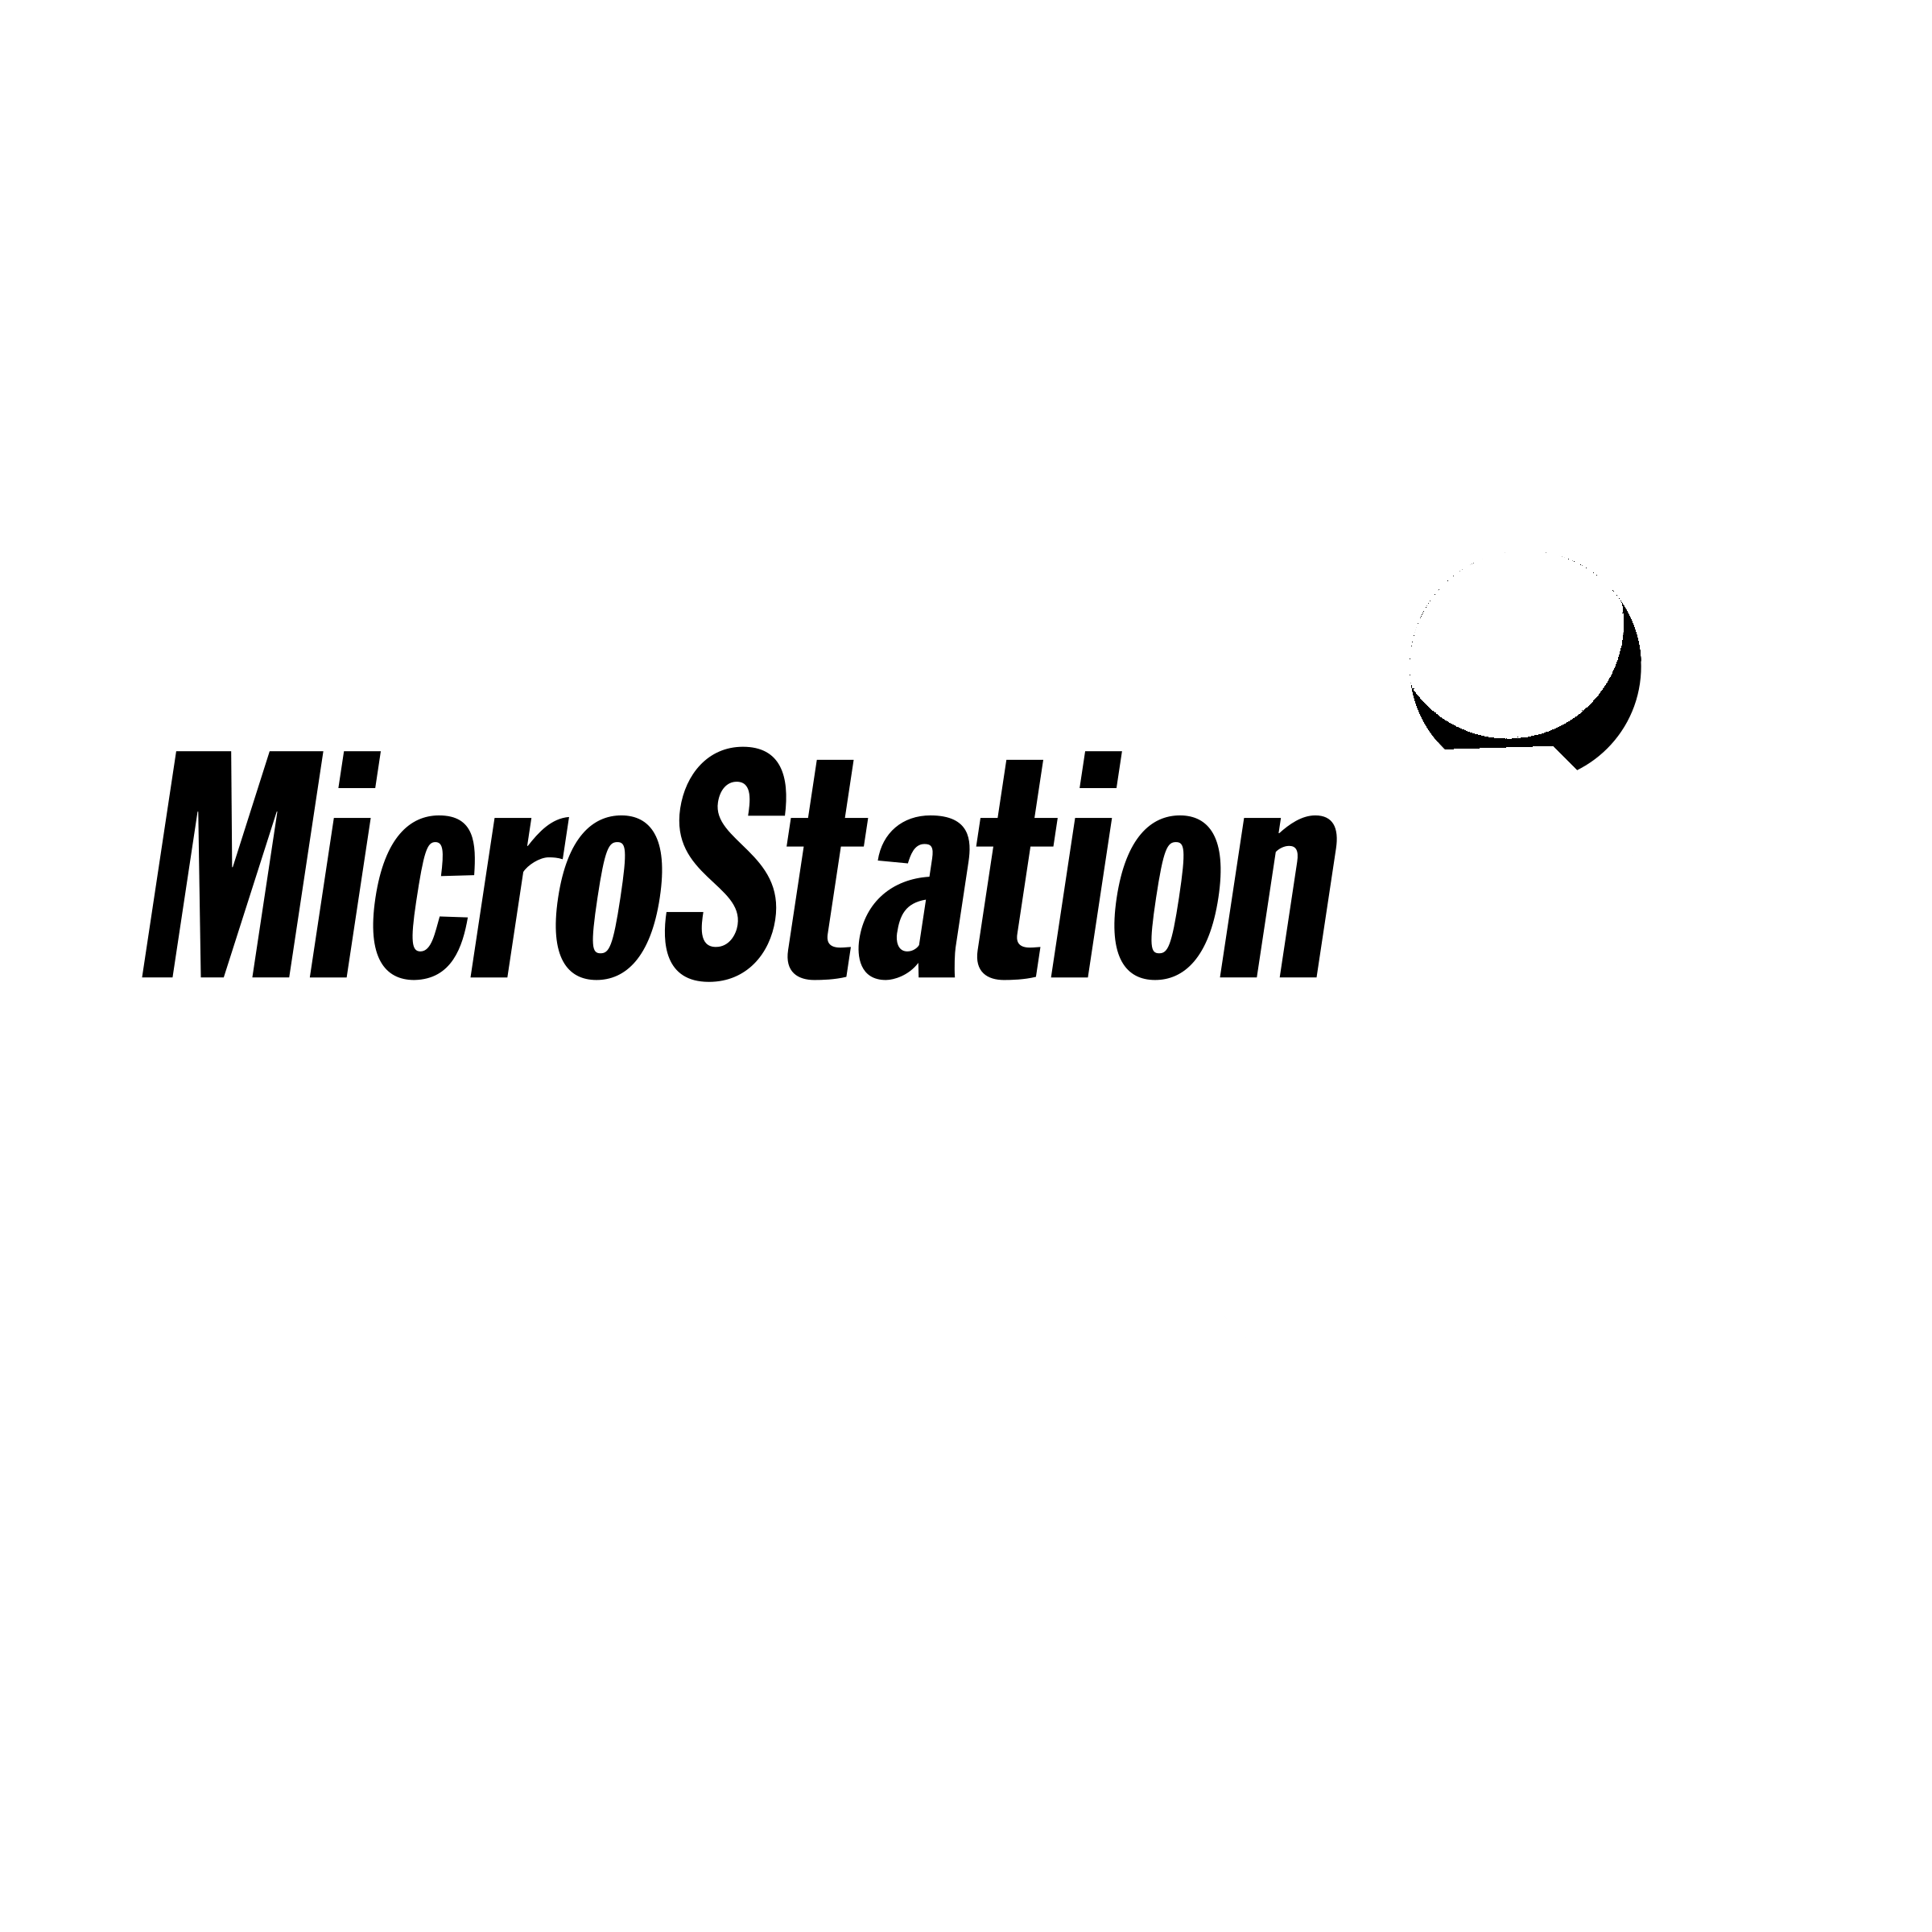 MicroStation Logo - MicroStation Logo PNG Transparent & SVG Vector - Freebie Supply